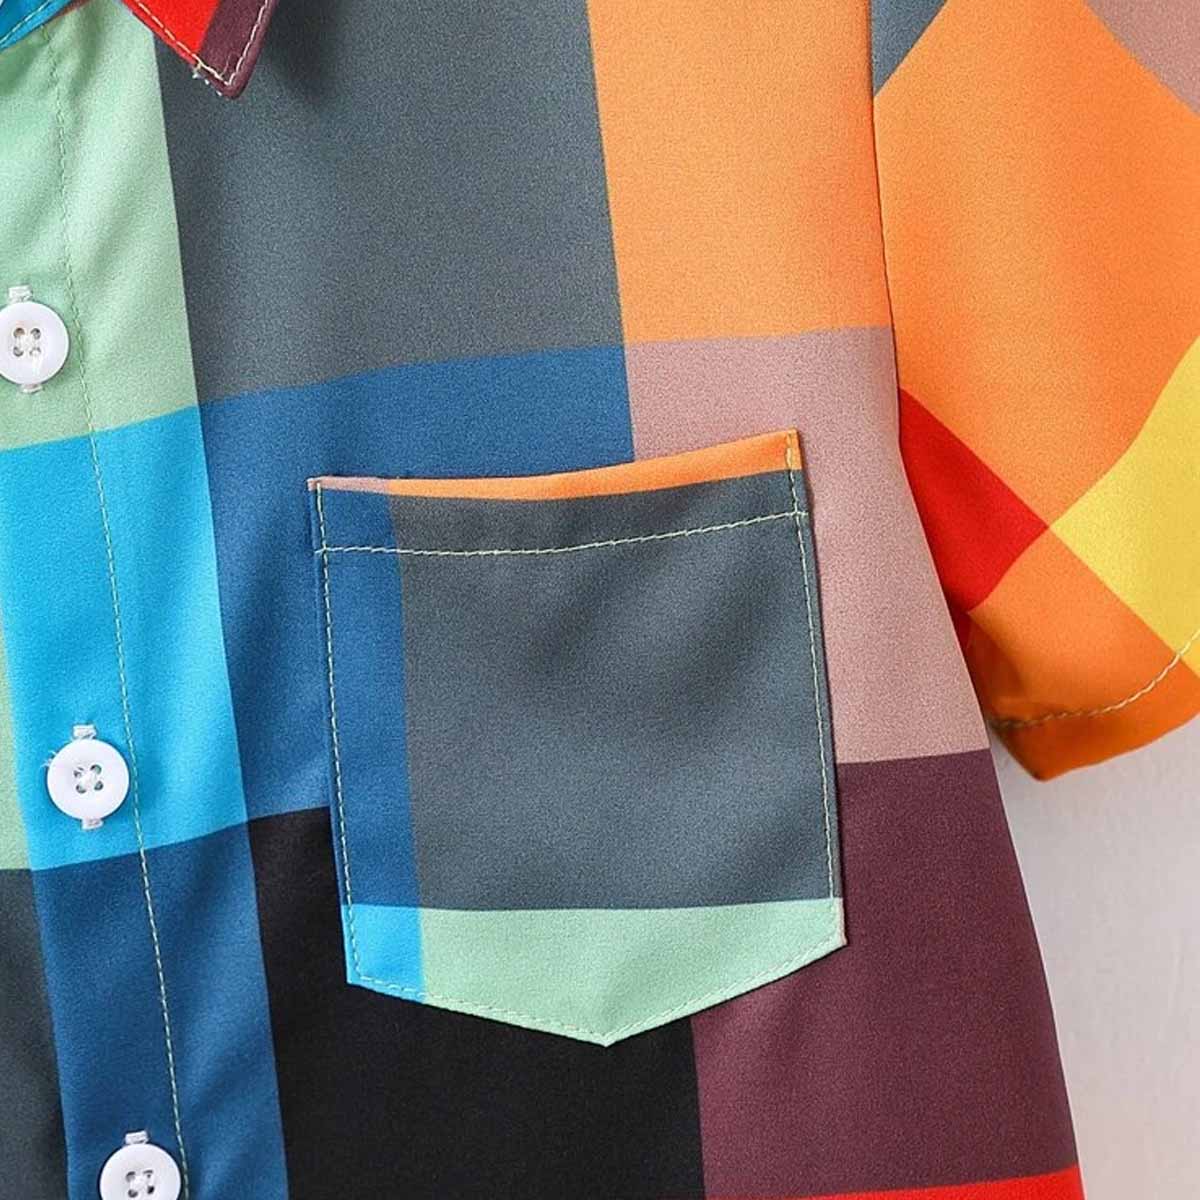 Venutaloza Plaid Patched Pocket Designer Print Button Front Shirt For Boy.